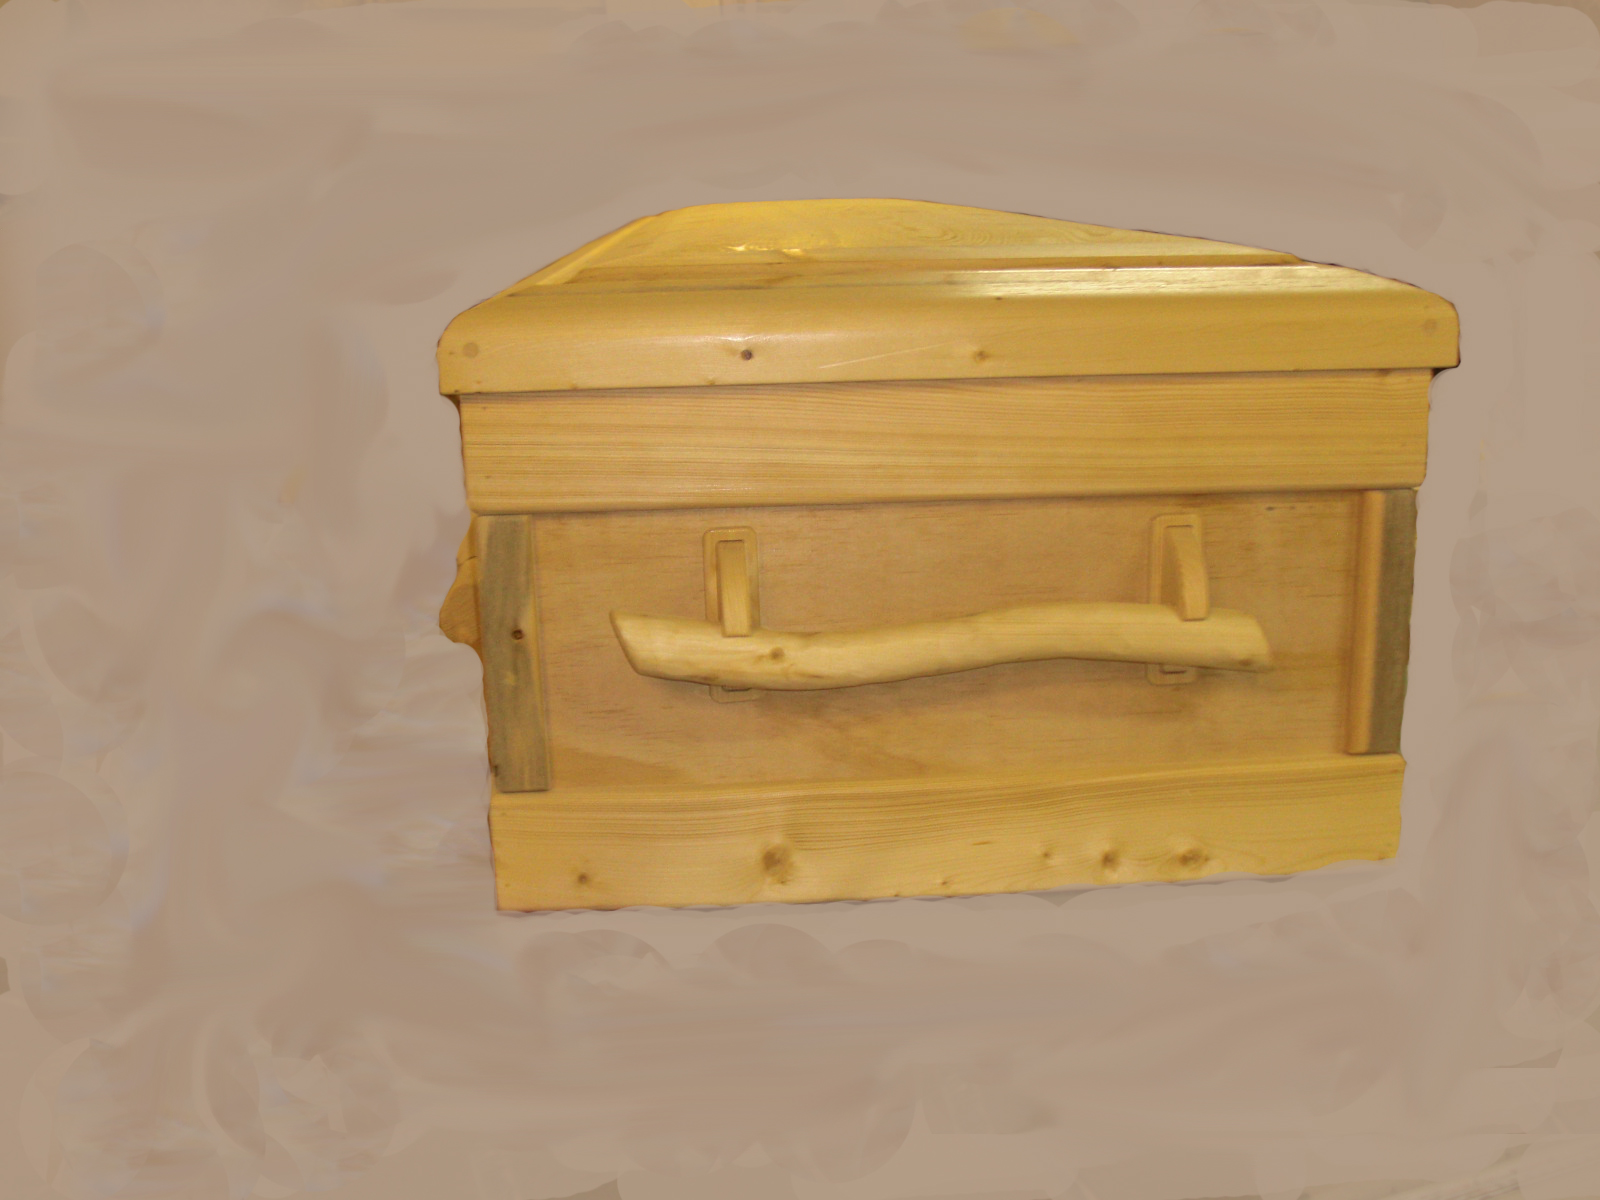 woodworking plans caskets